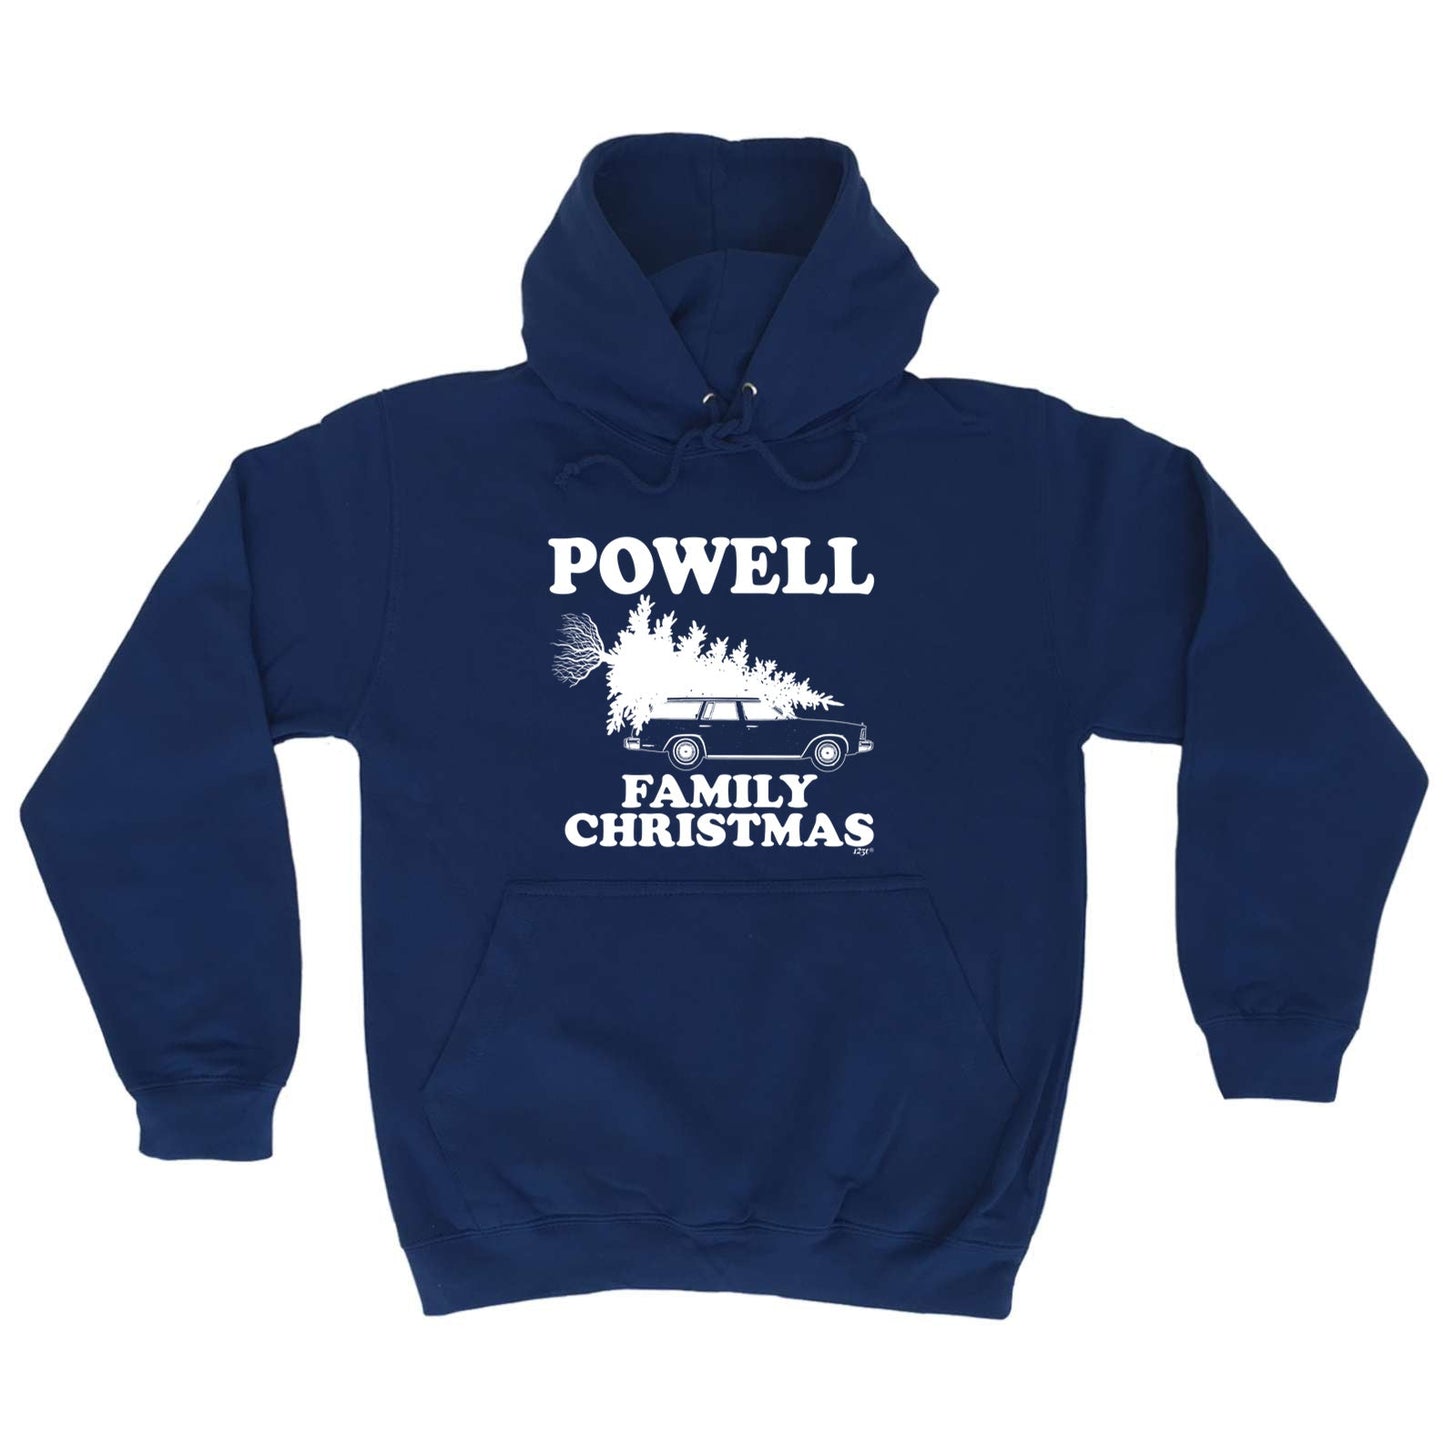 Family Christmas Powell - Xmas Novelty Hoodies Hoodie